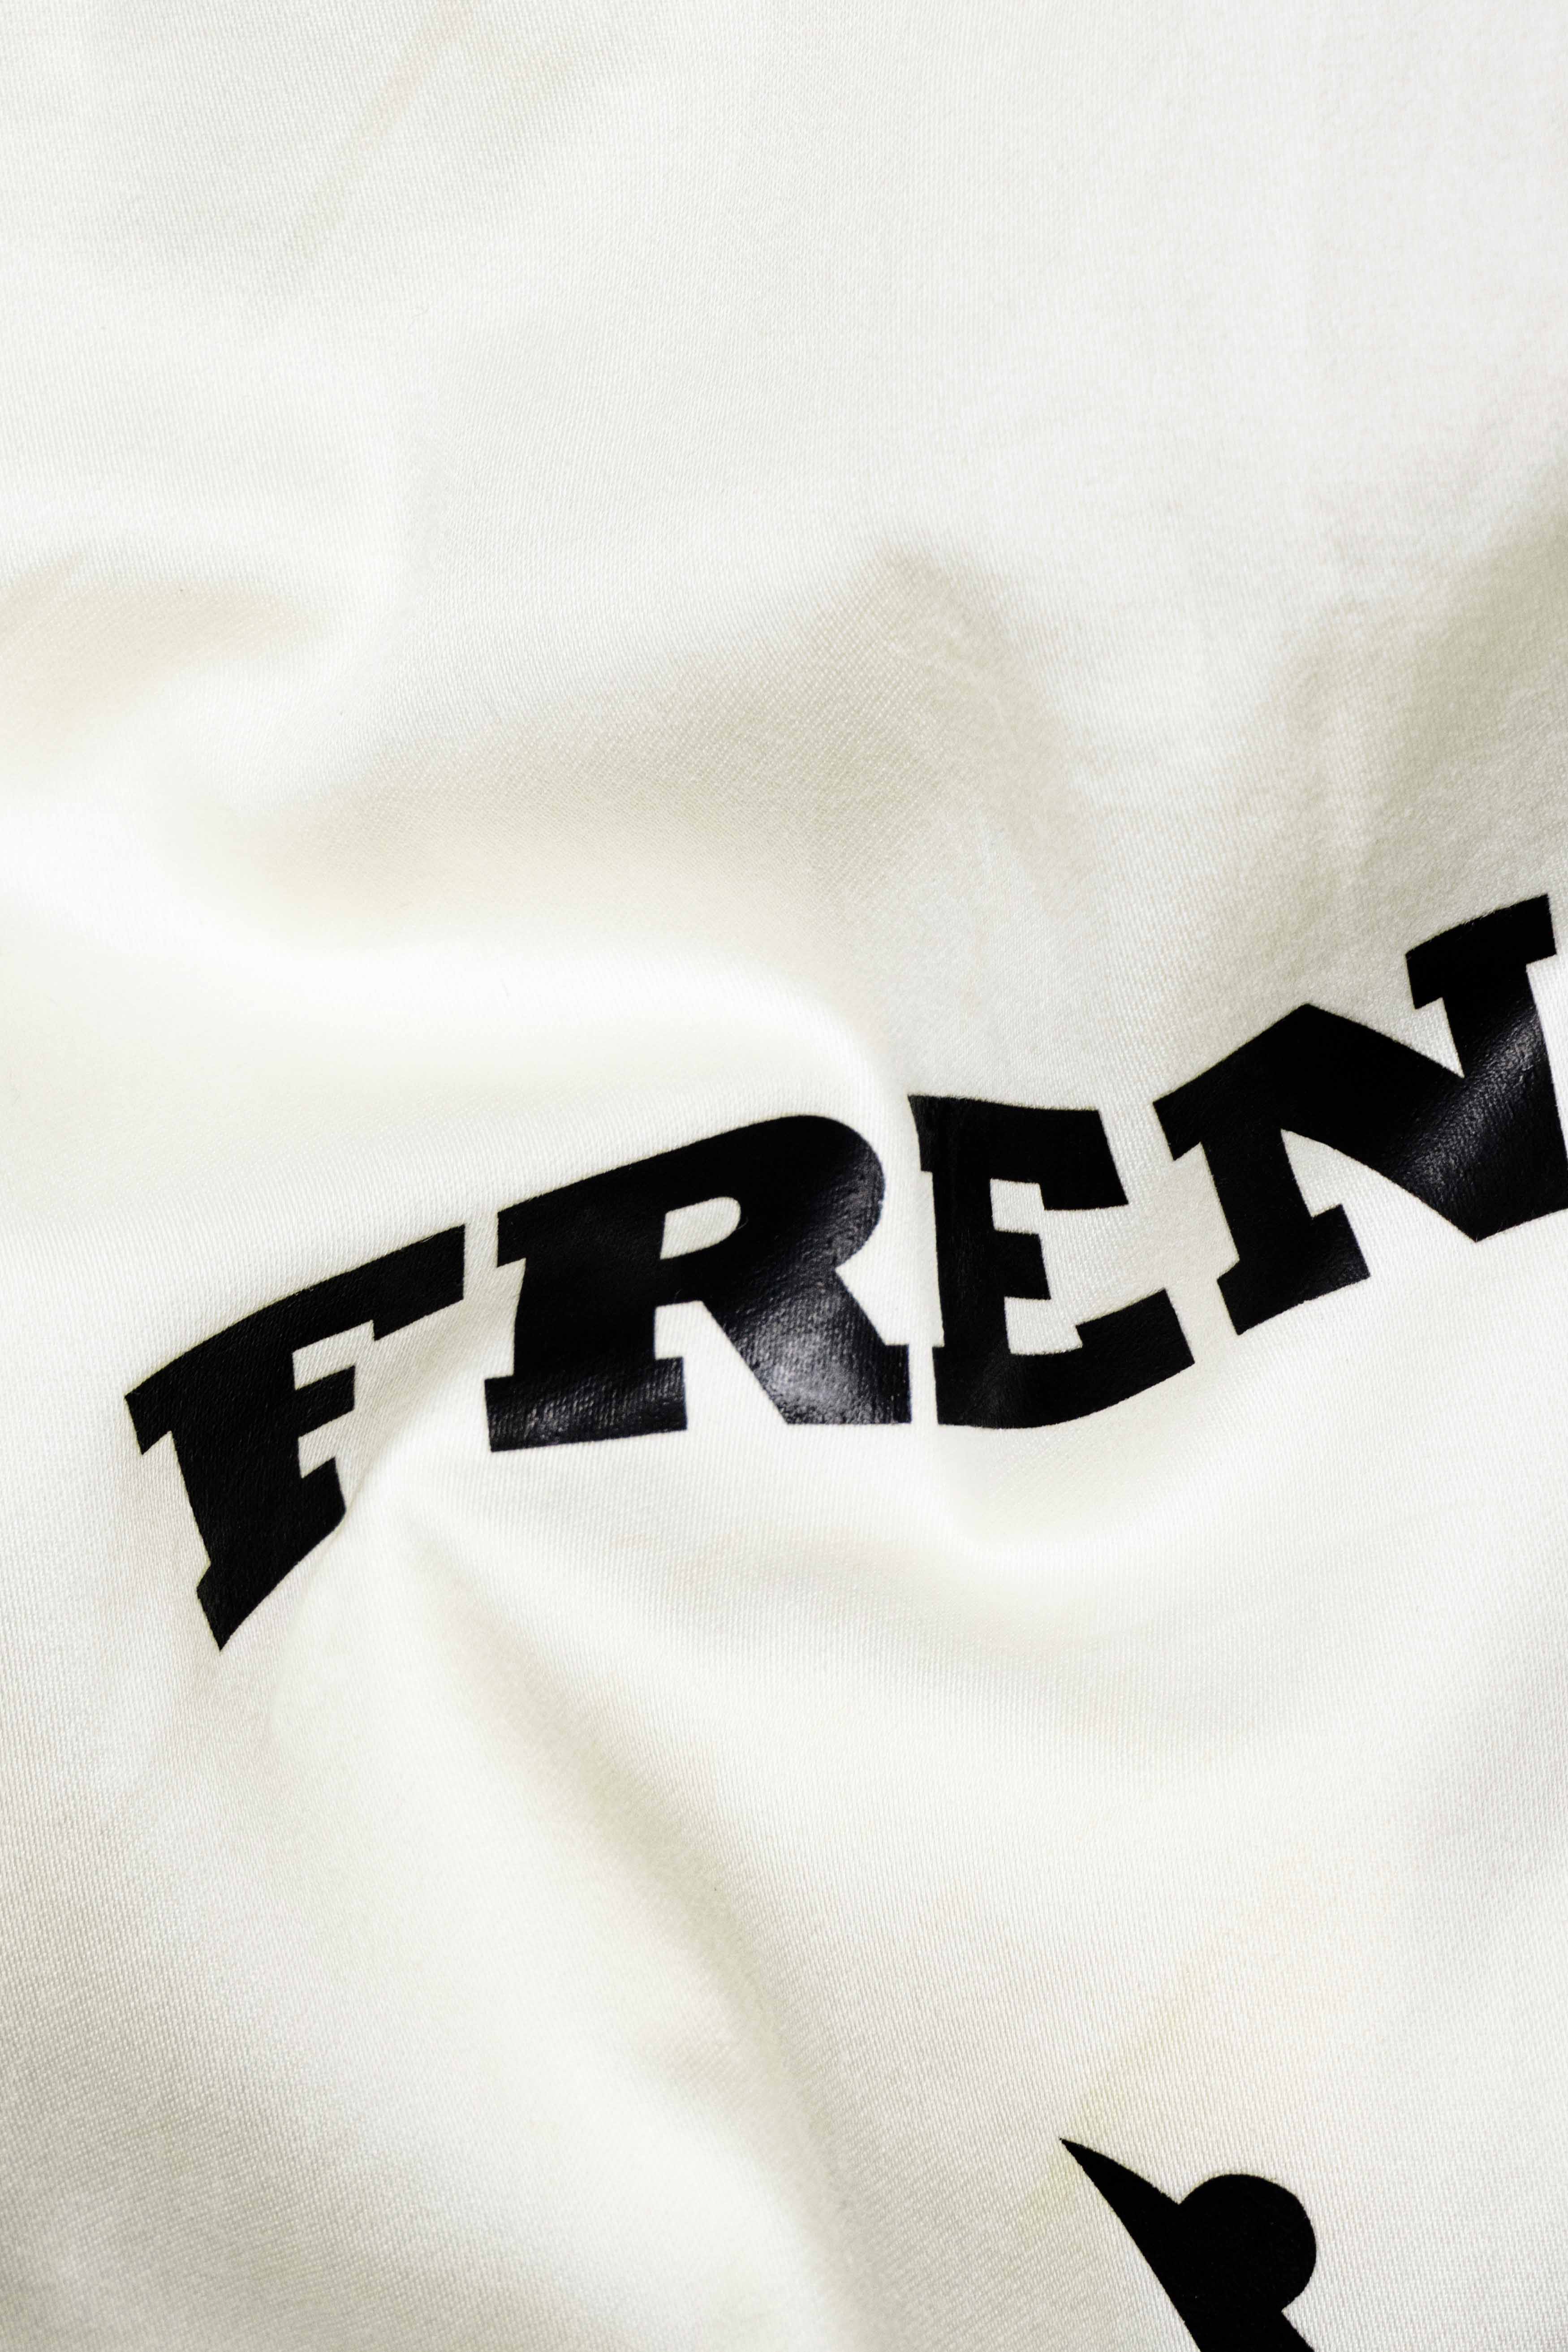 Amour Cream French Crown Printed Subtle Sheen Super Soft Premium Cotton Designer Shirt